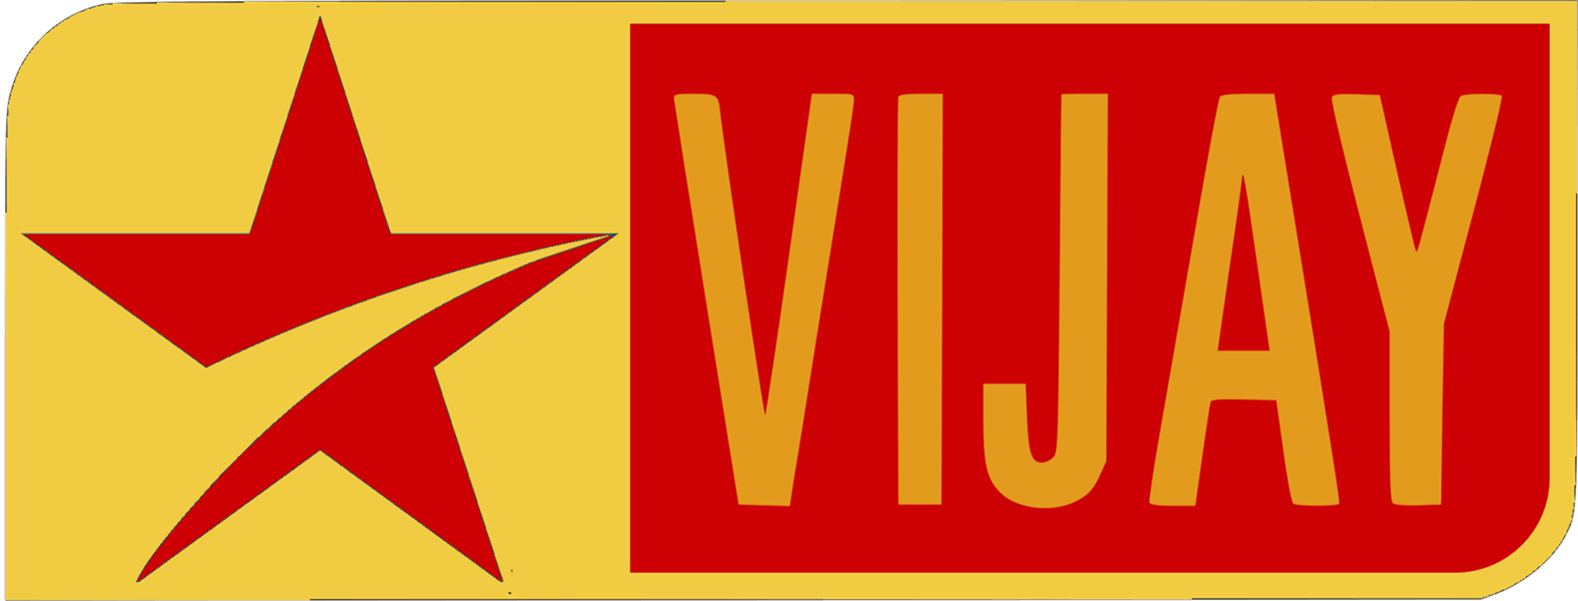 Old TV Logo - Image - Vijay TV Old LOGO.png | Logopedia | FANDOM powered by Wikia